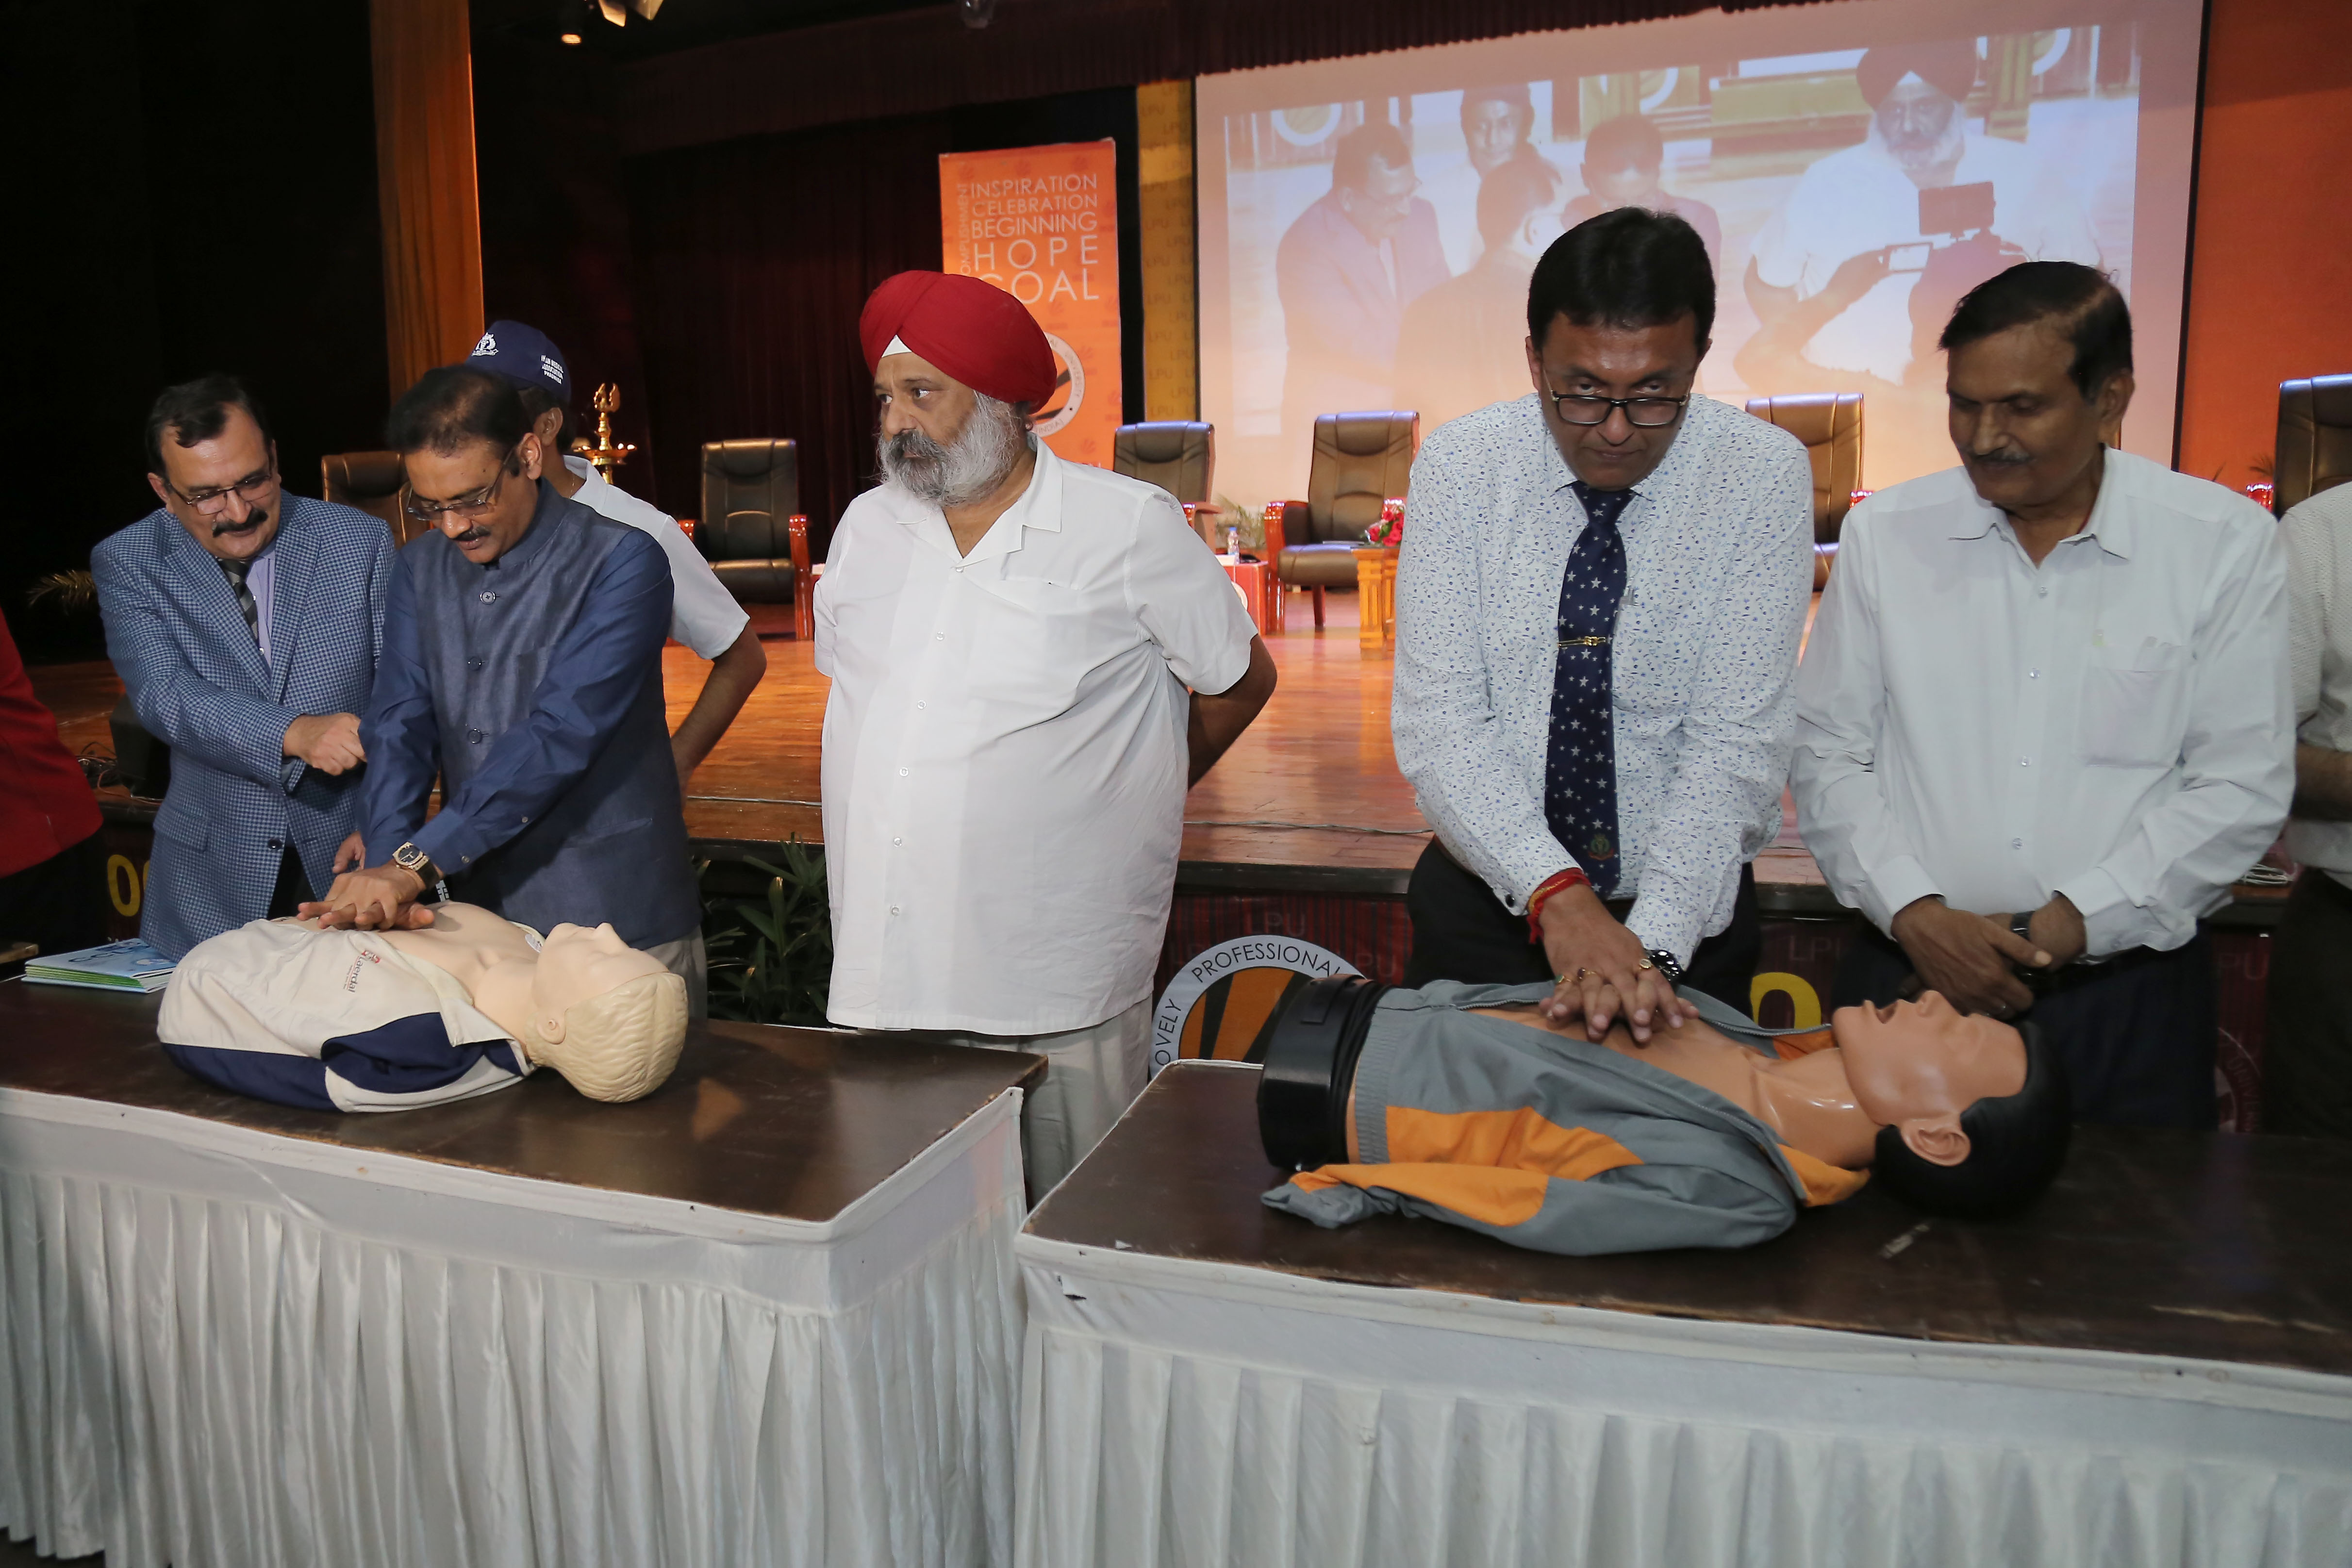 IMA President Dr Santanu Sen and LPU Chancellor Mr Ashok Mittal applying 'compression' technique on mannequins at LPU during International CPR Day Celebration